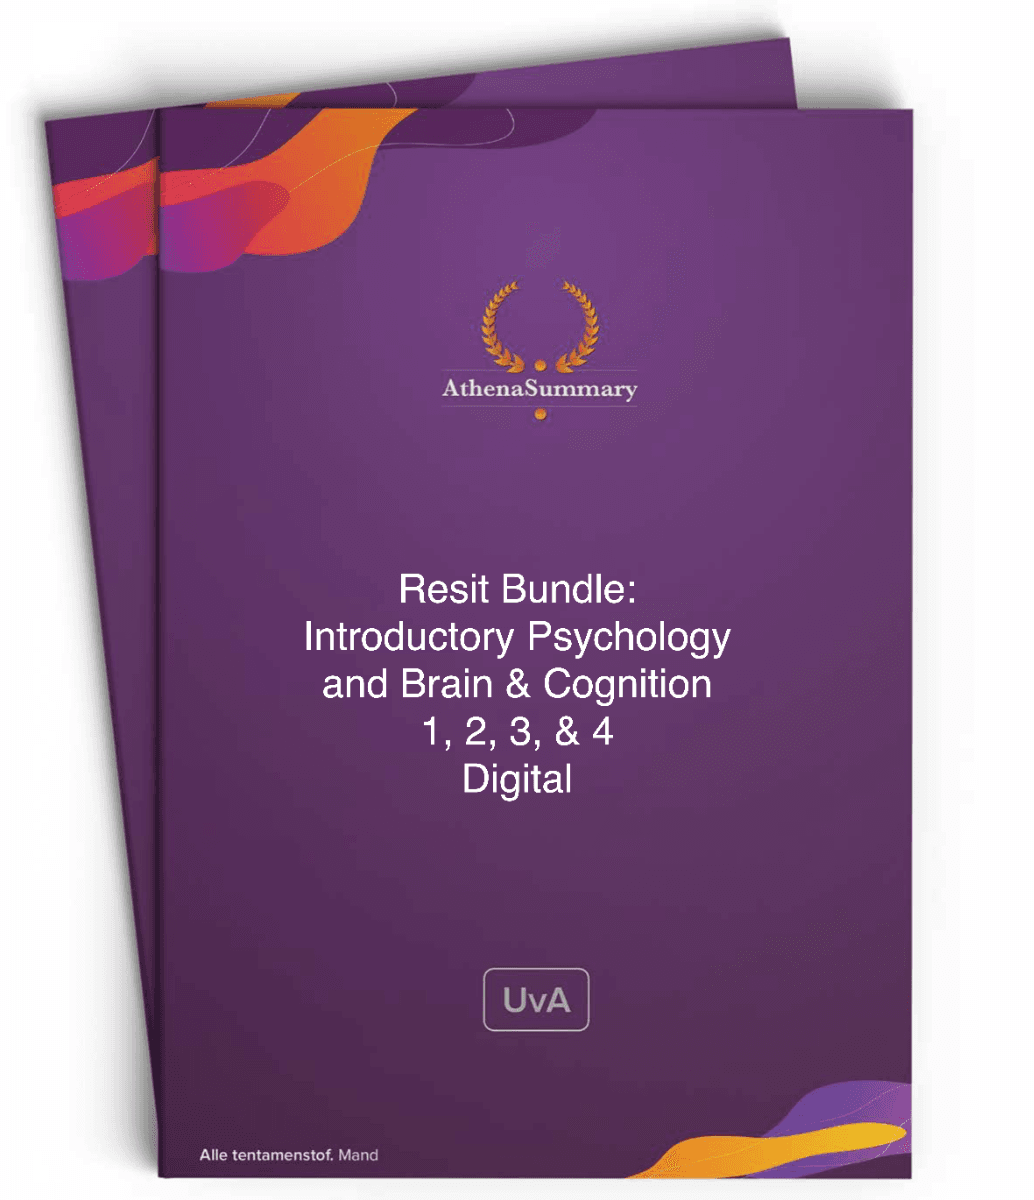 Resit Bundle: Introductory Psychology and Brain & Cognition - Digital